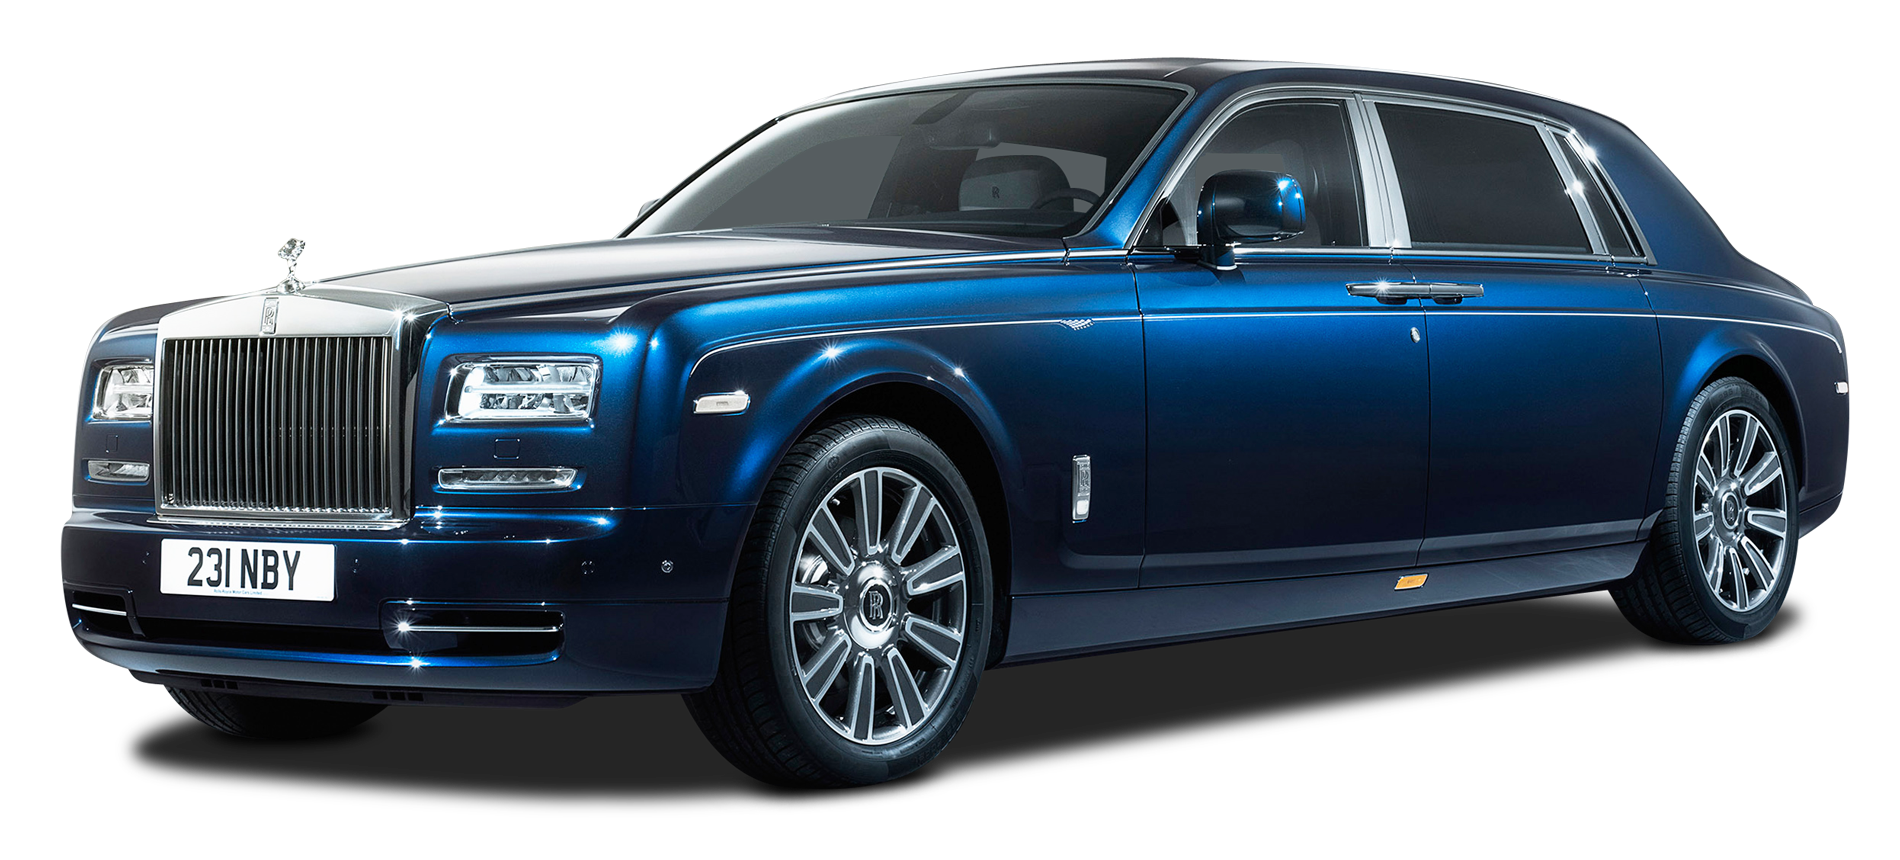 Black Rolls Royce Wraith Car 